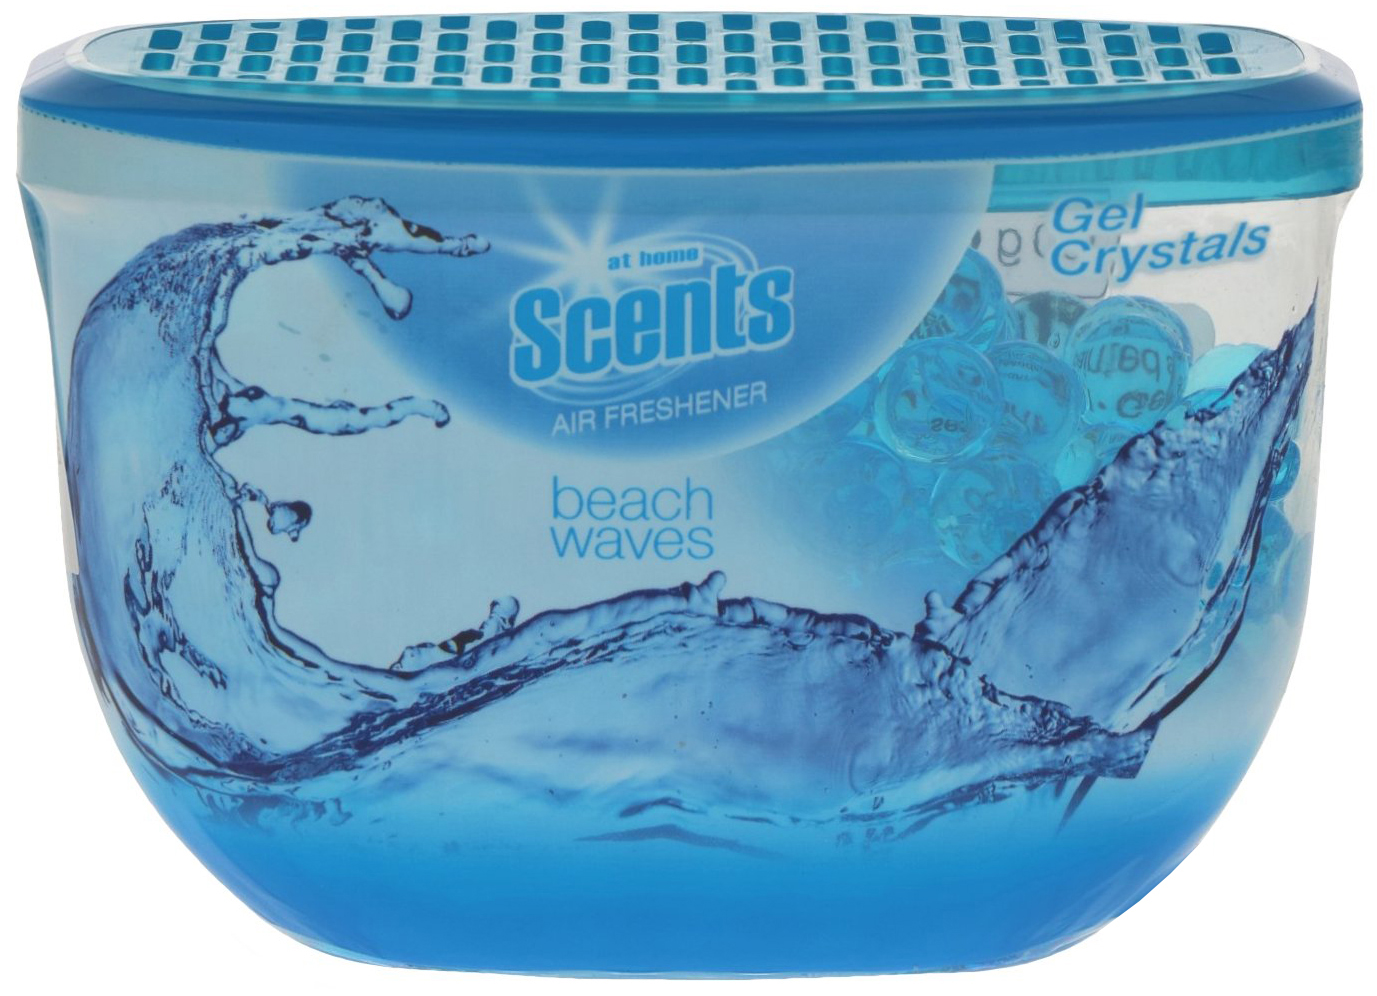 00578 - air freshener gel crystals 150 g - beach waves